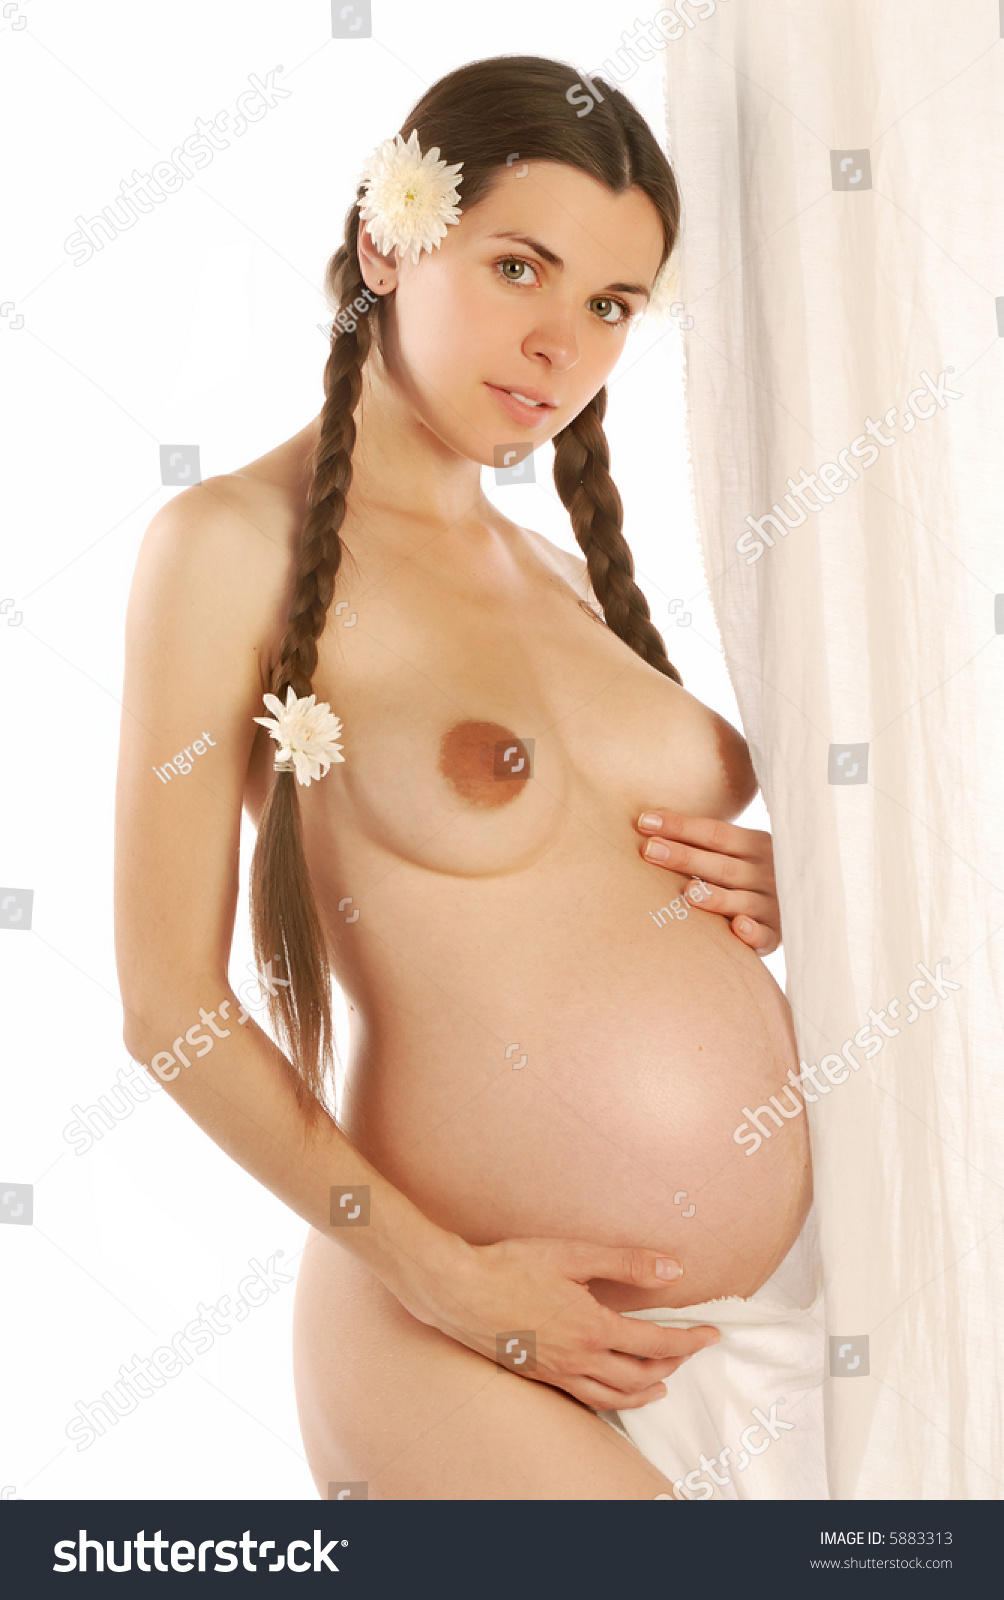 clinton douglas add erotic pregnant pictures photo